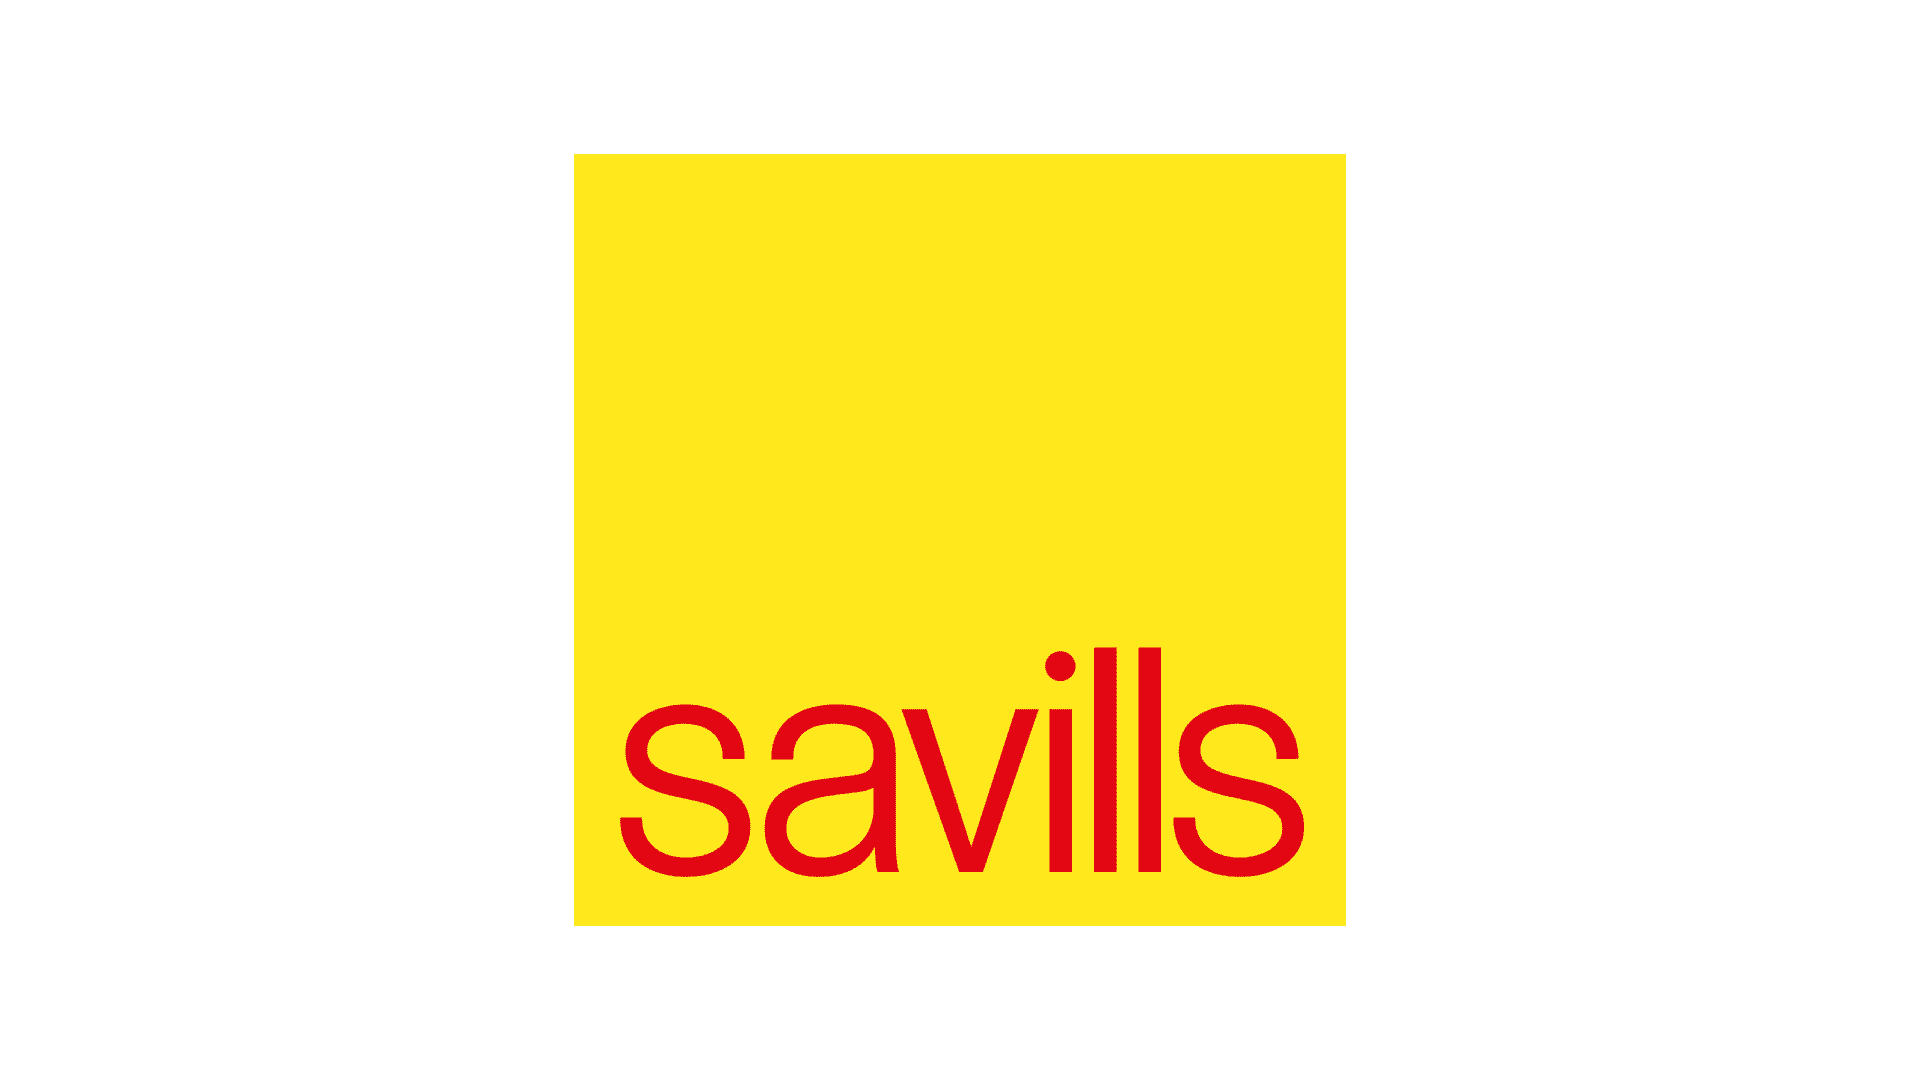 Savills works with CADS